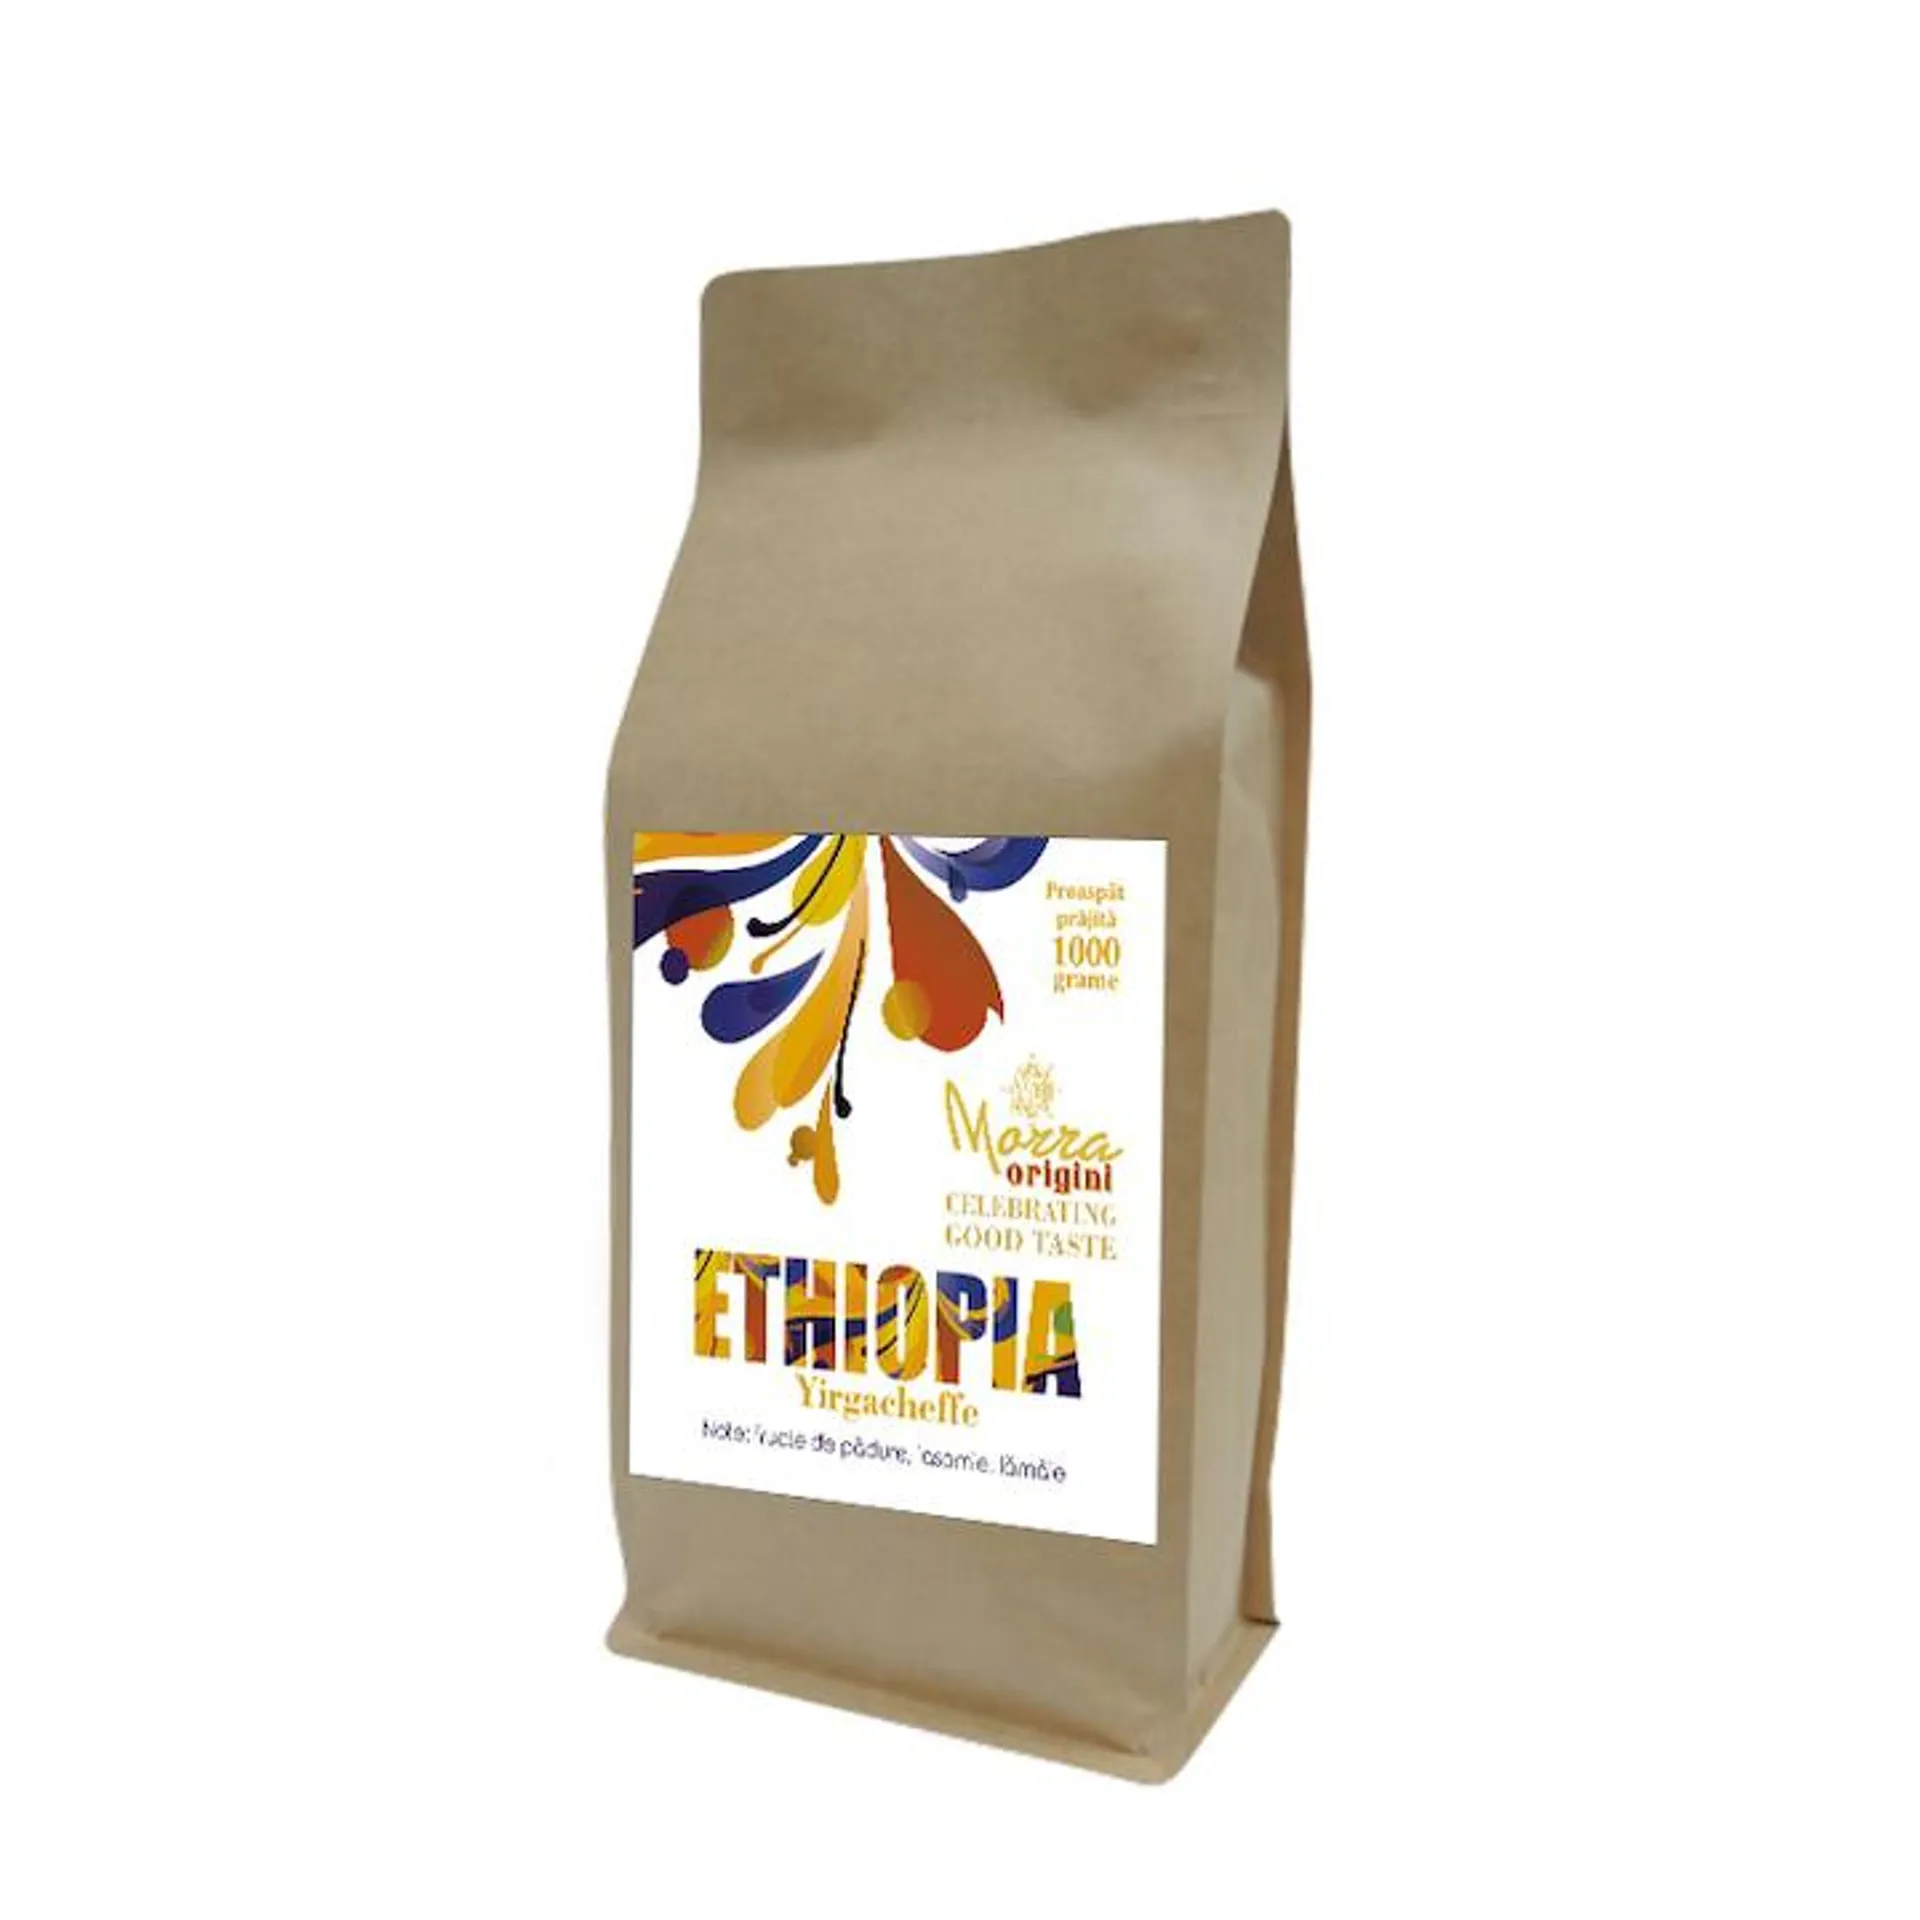 Cafea boabe Morra Origini Ethiopia Yirgacheffe, 1 kg